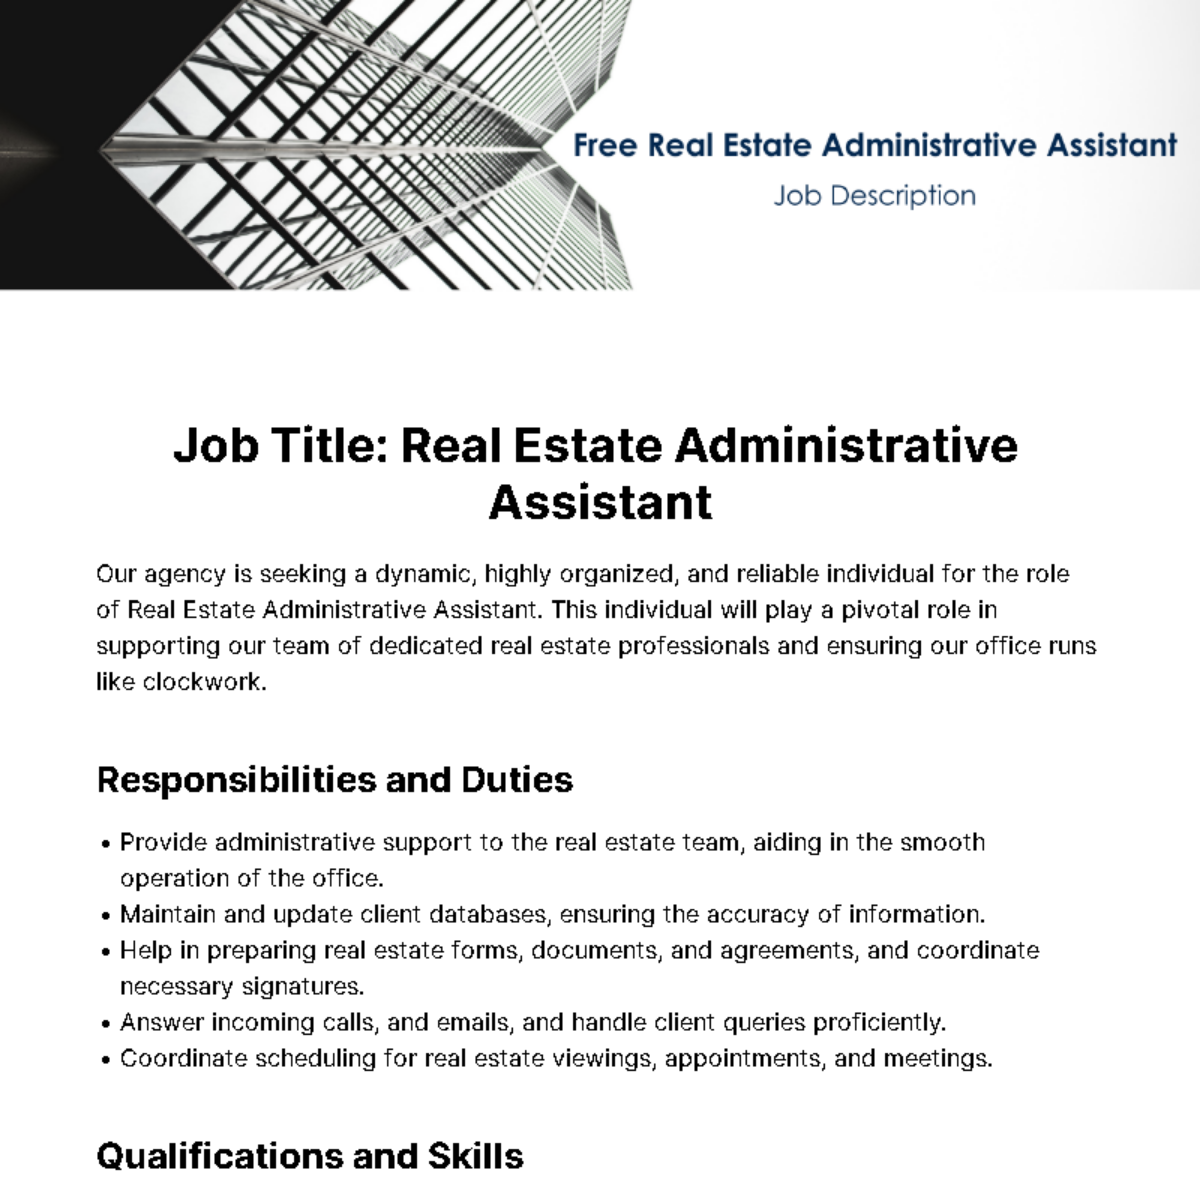 Free Real Estate Administrative Assistant Job Description Template